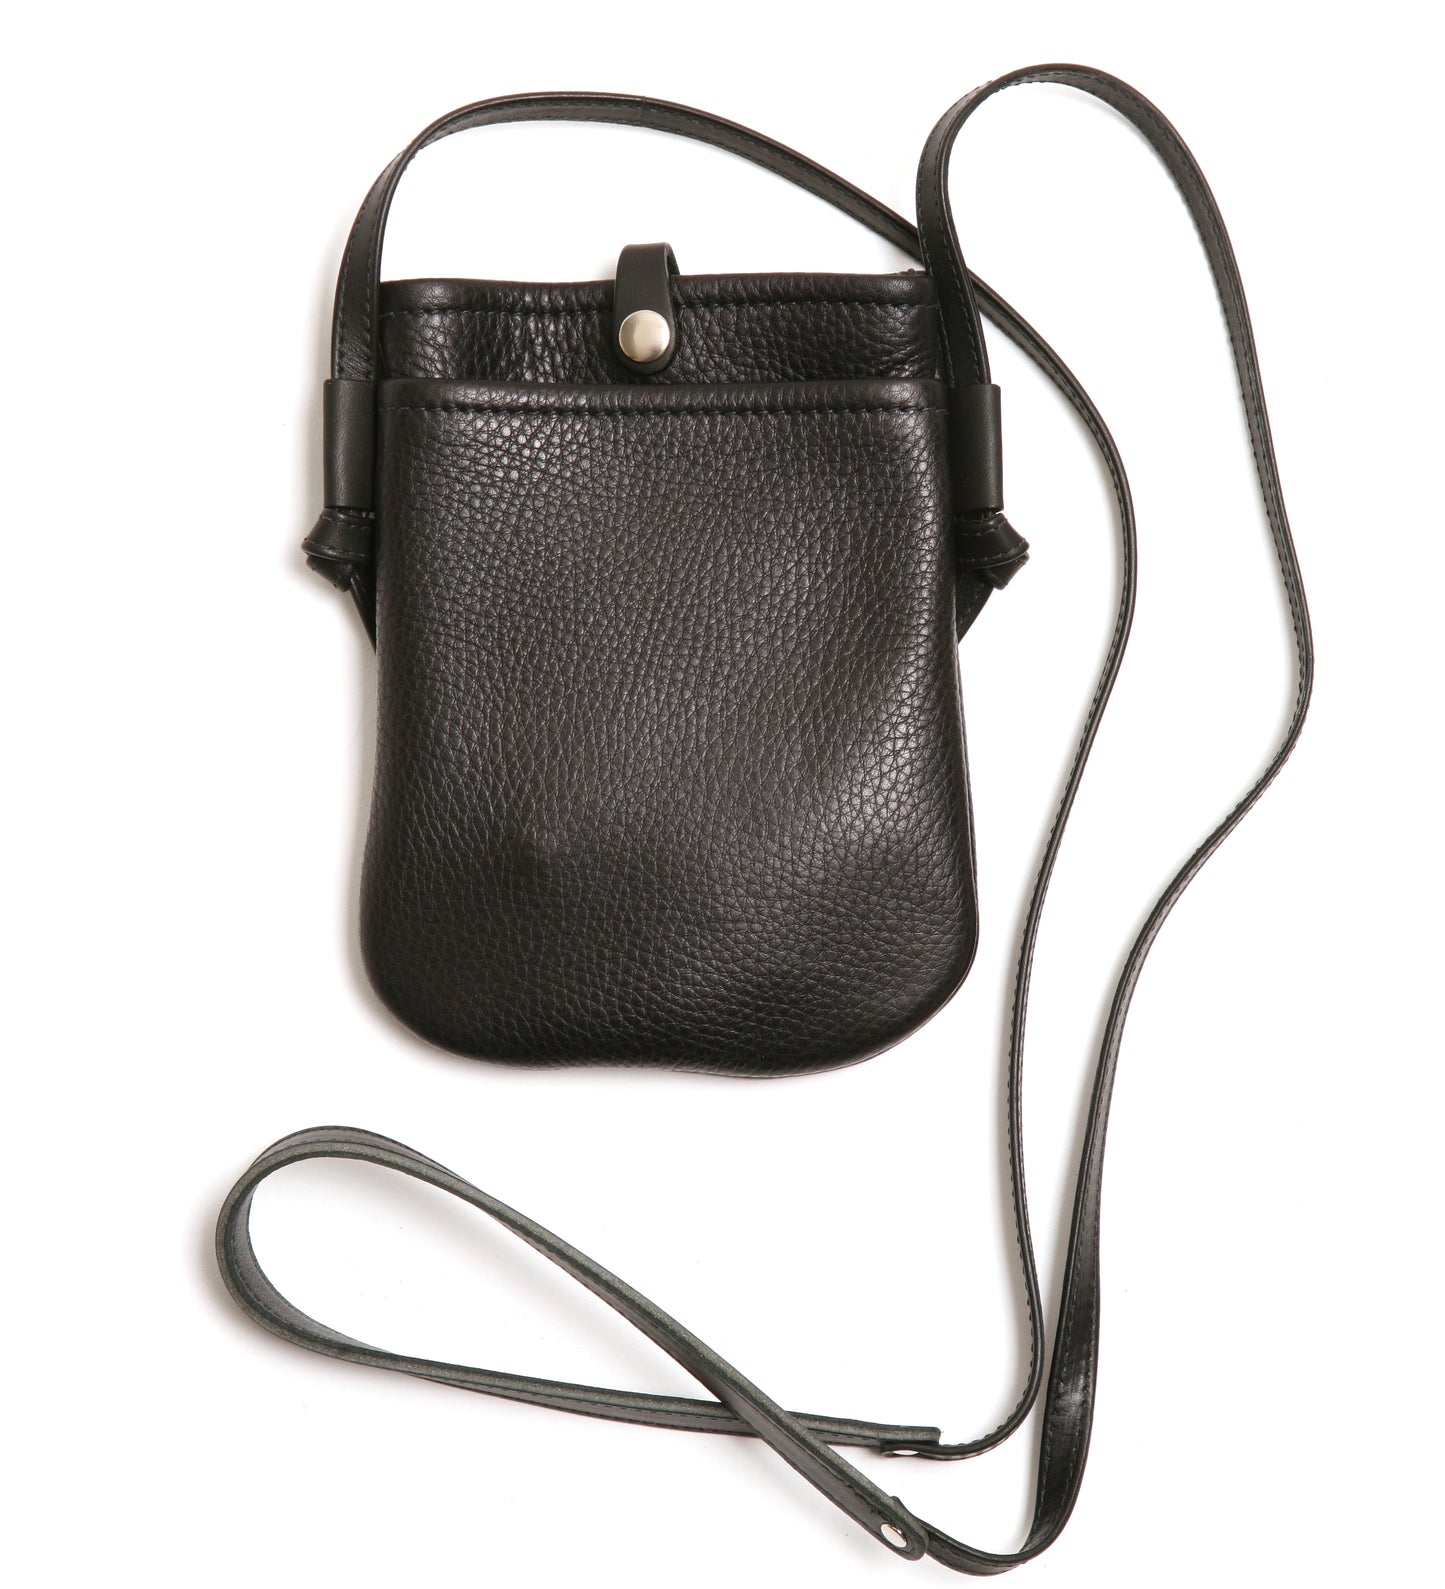 ZOOP mini satchel black